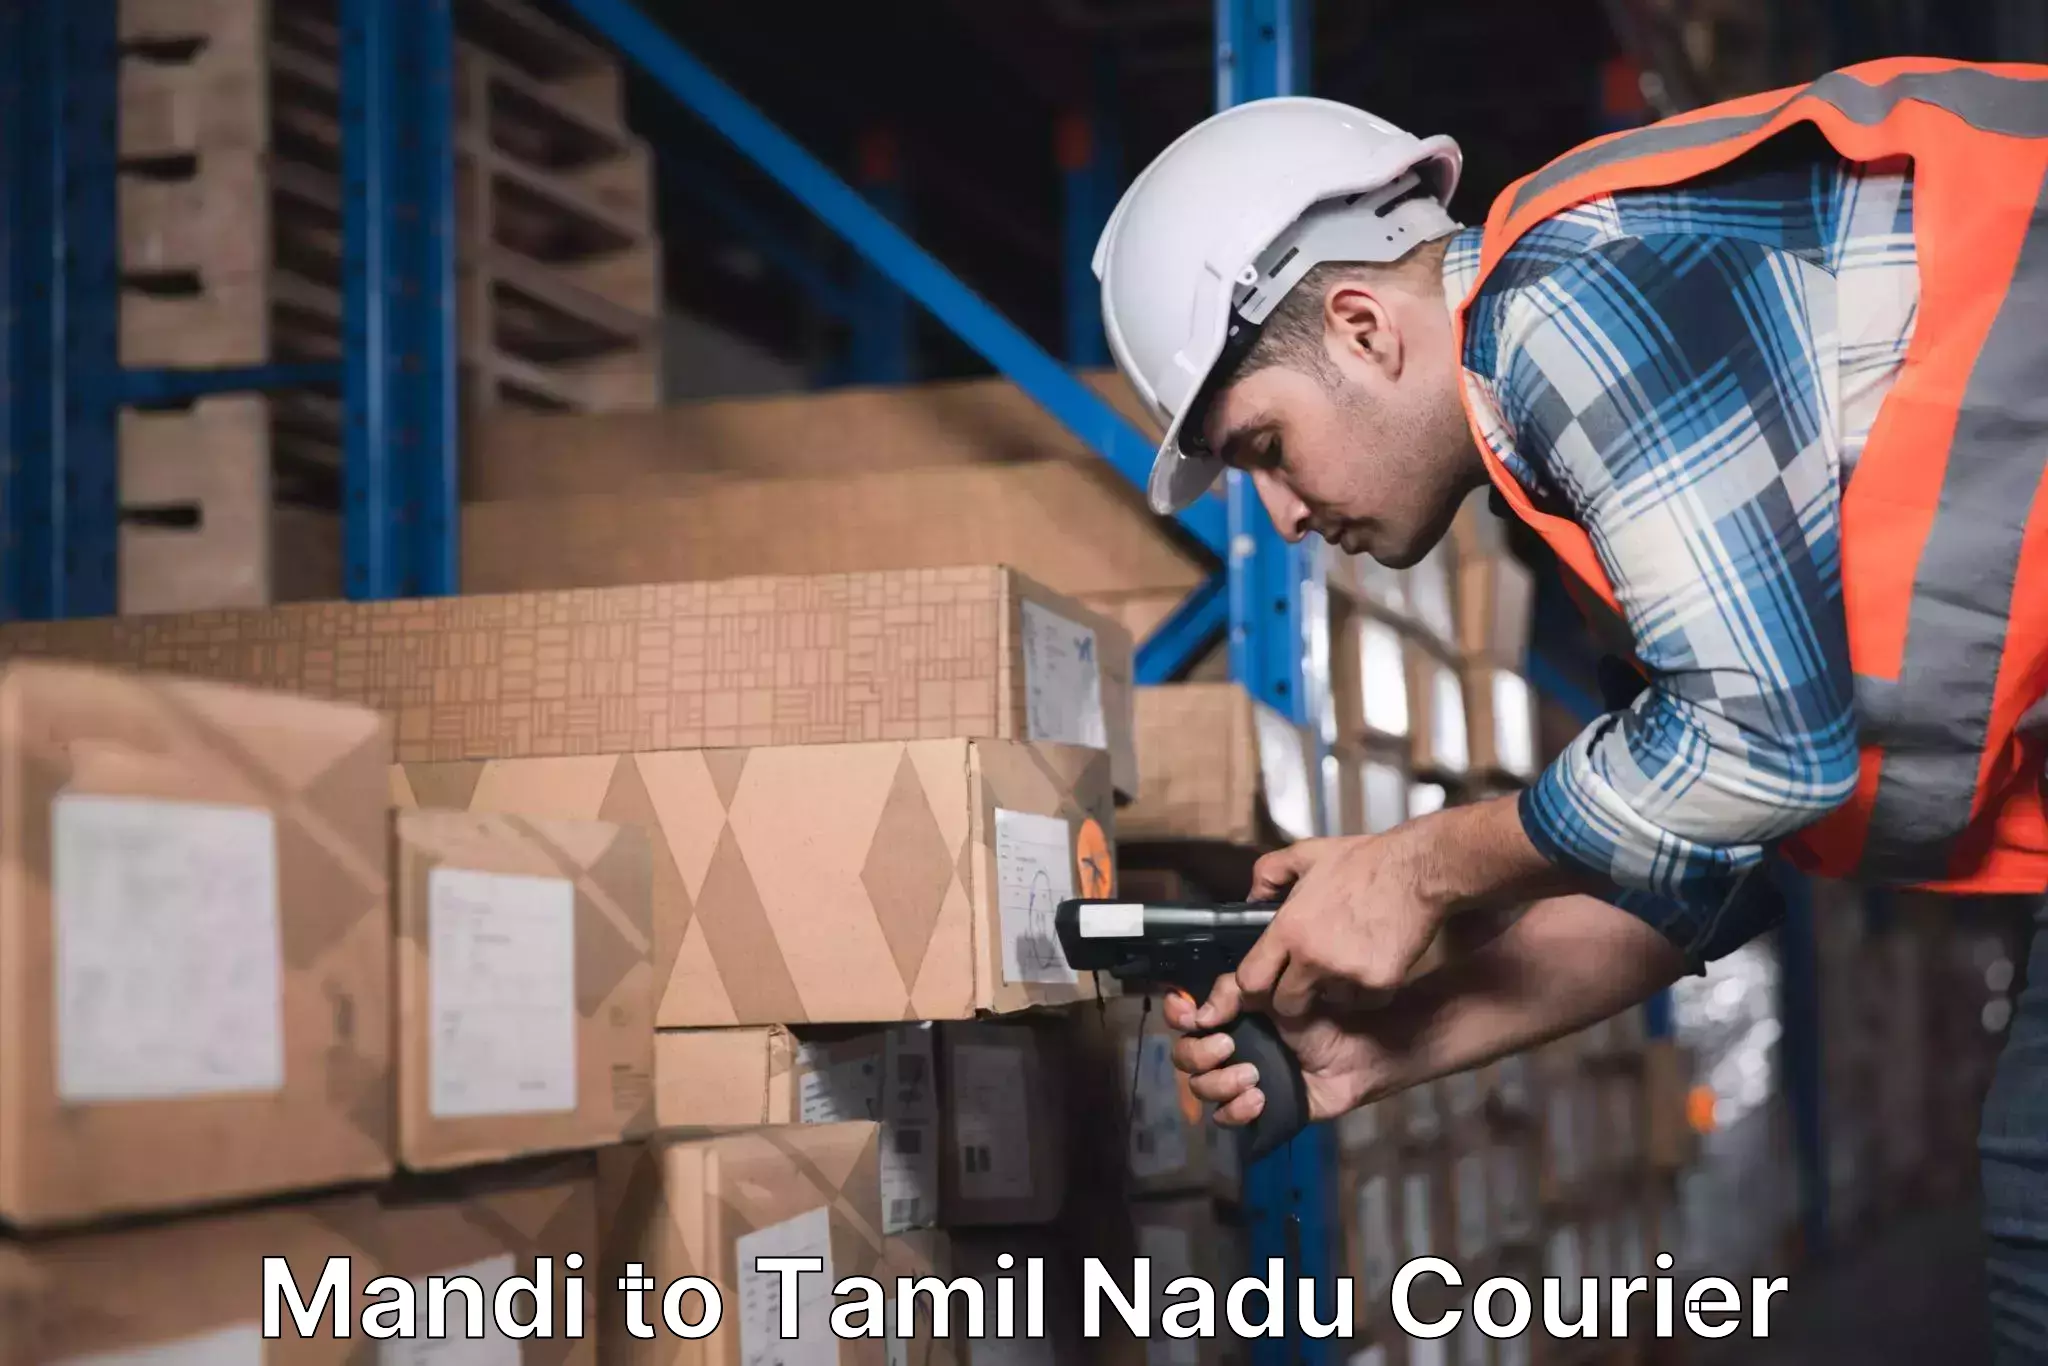 Courier service partnerships Mandi to Ambattur